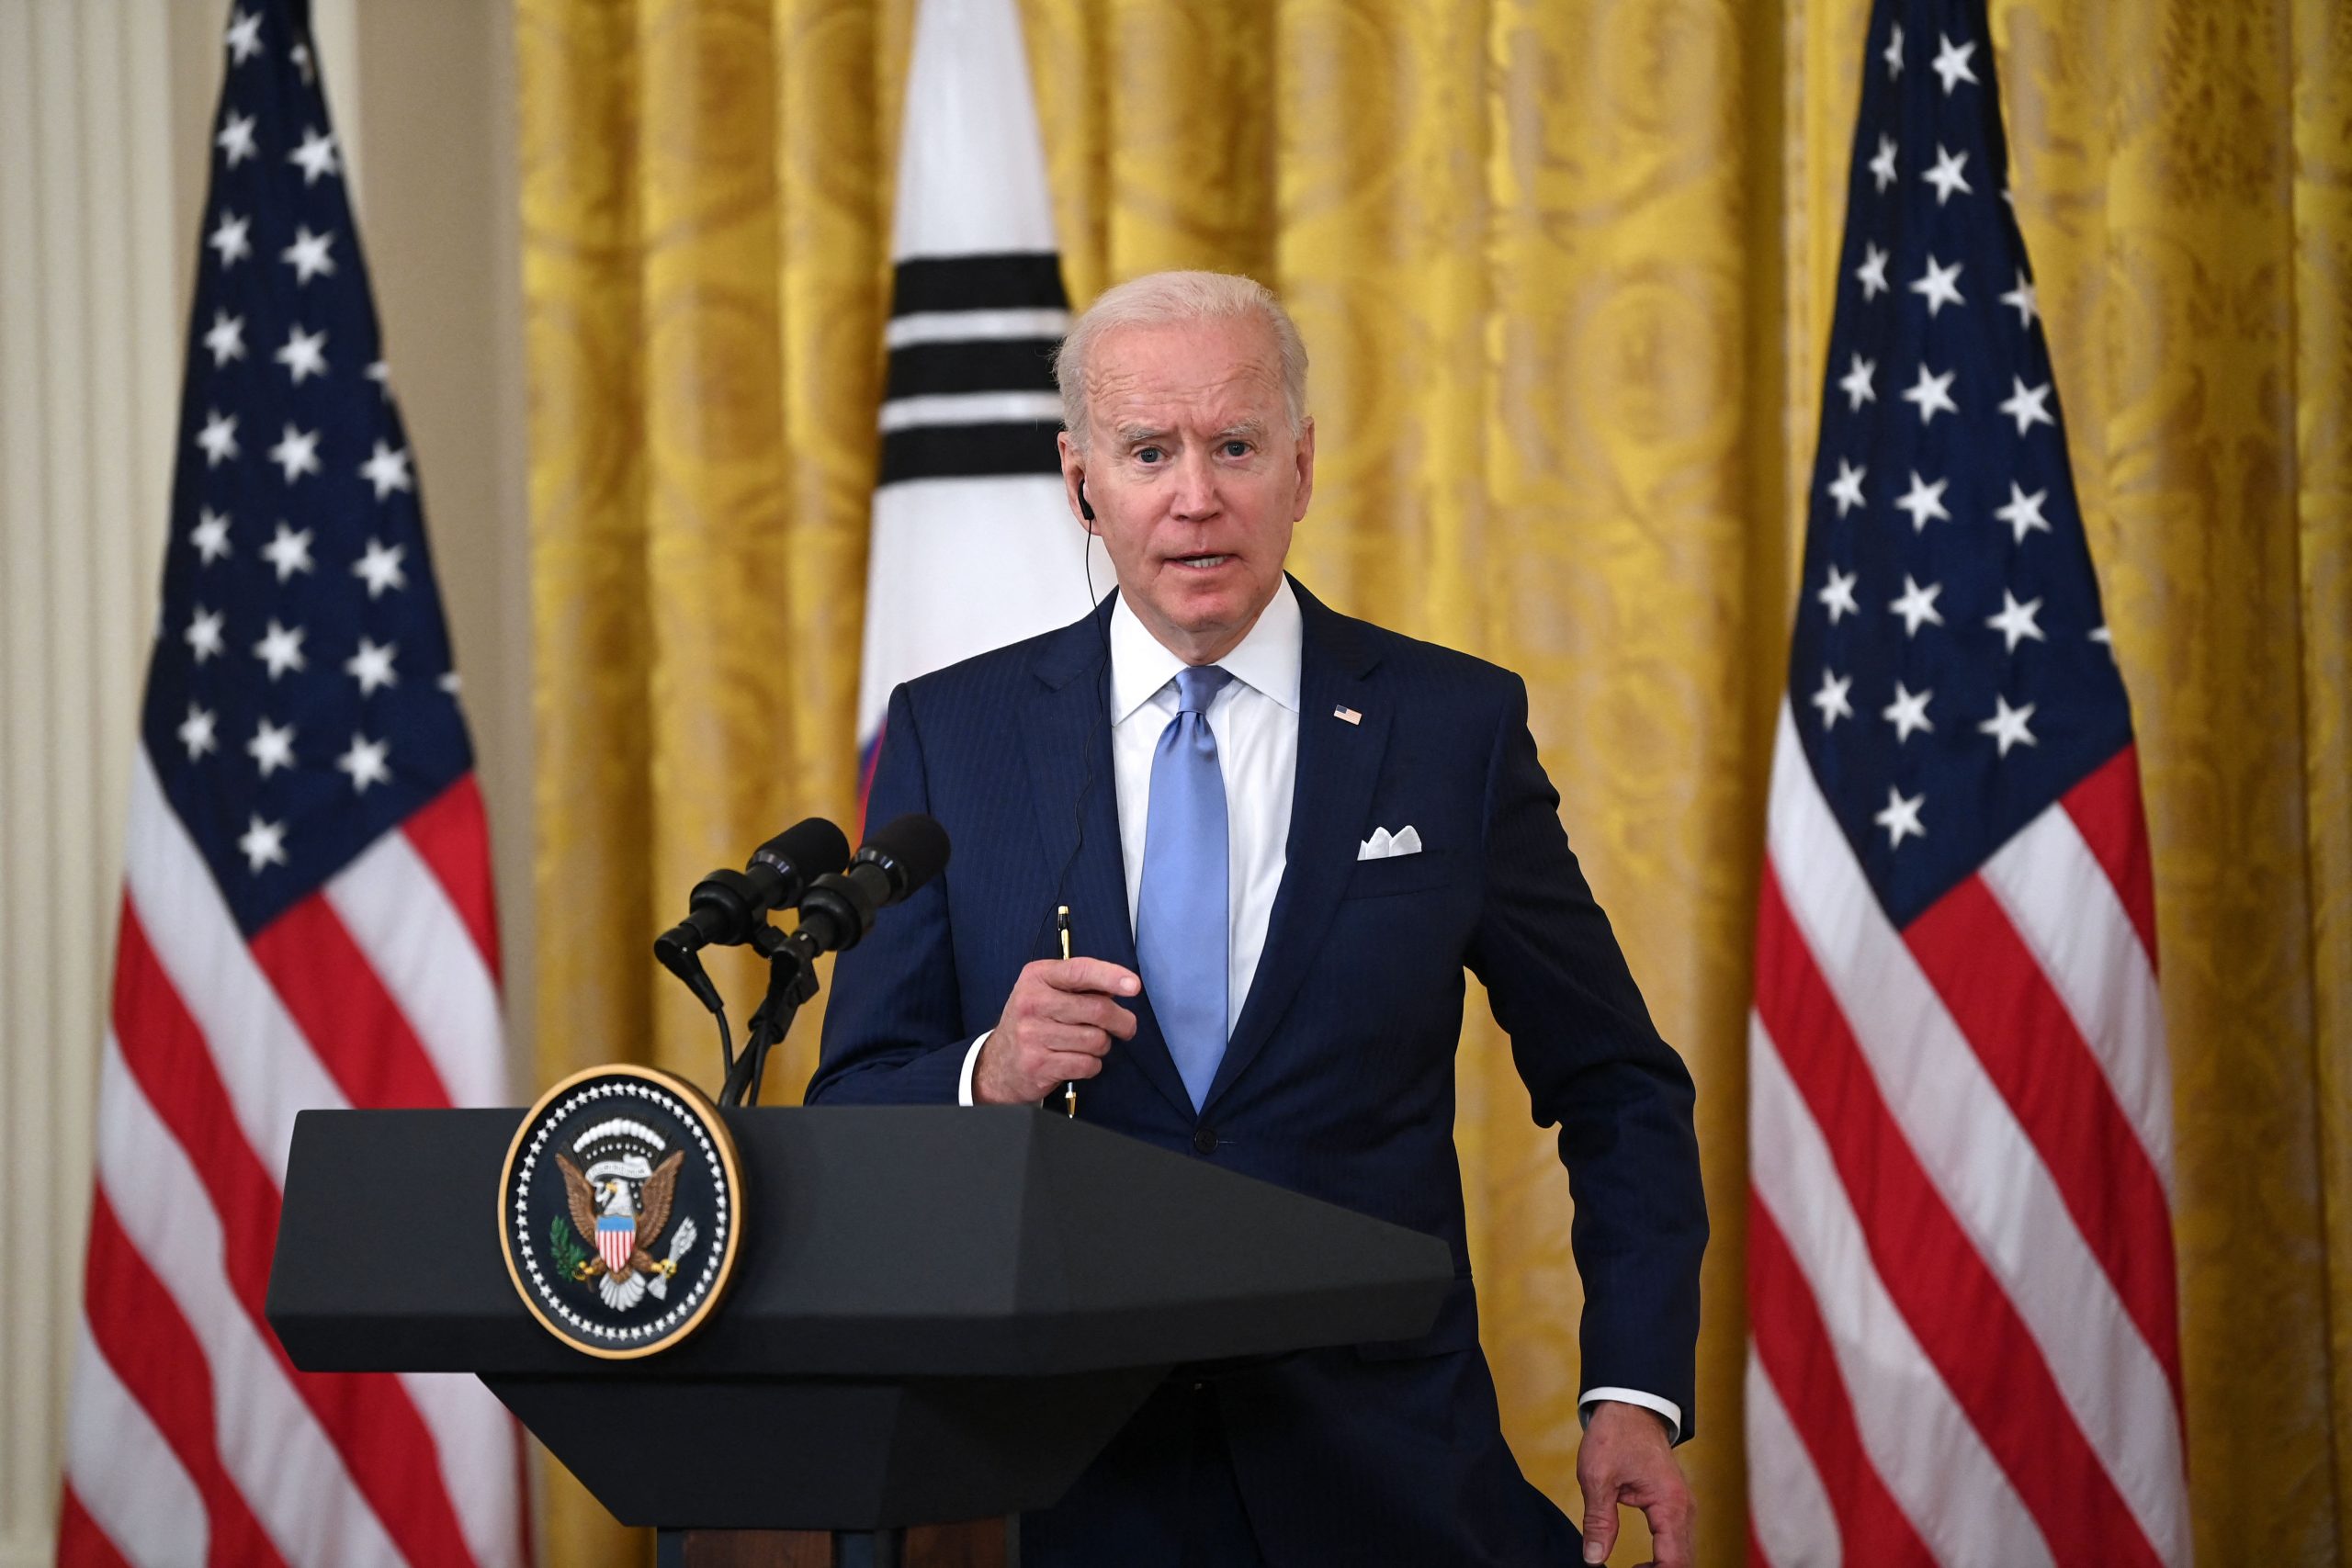 What is Joe Biden’s election reform bill?